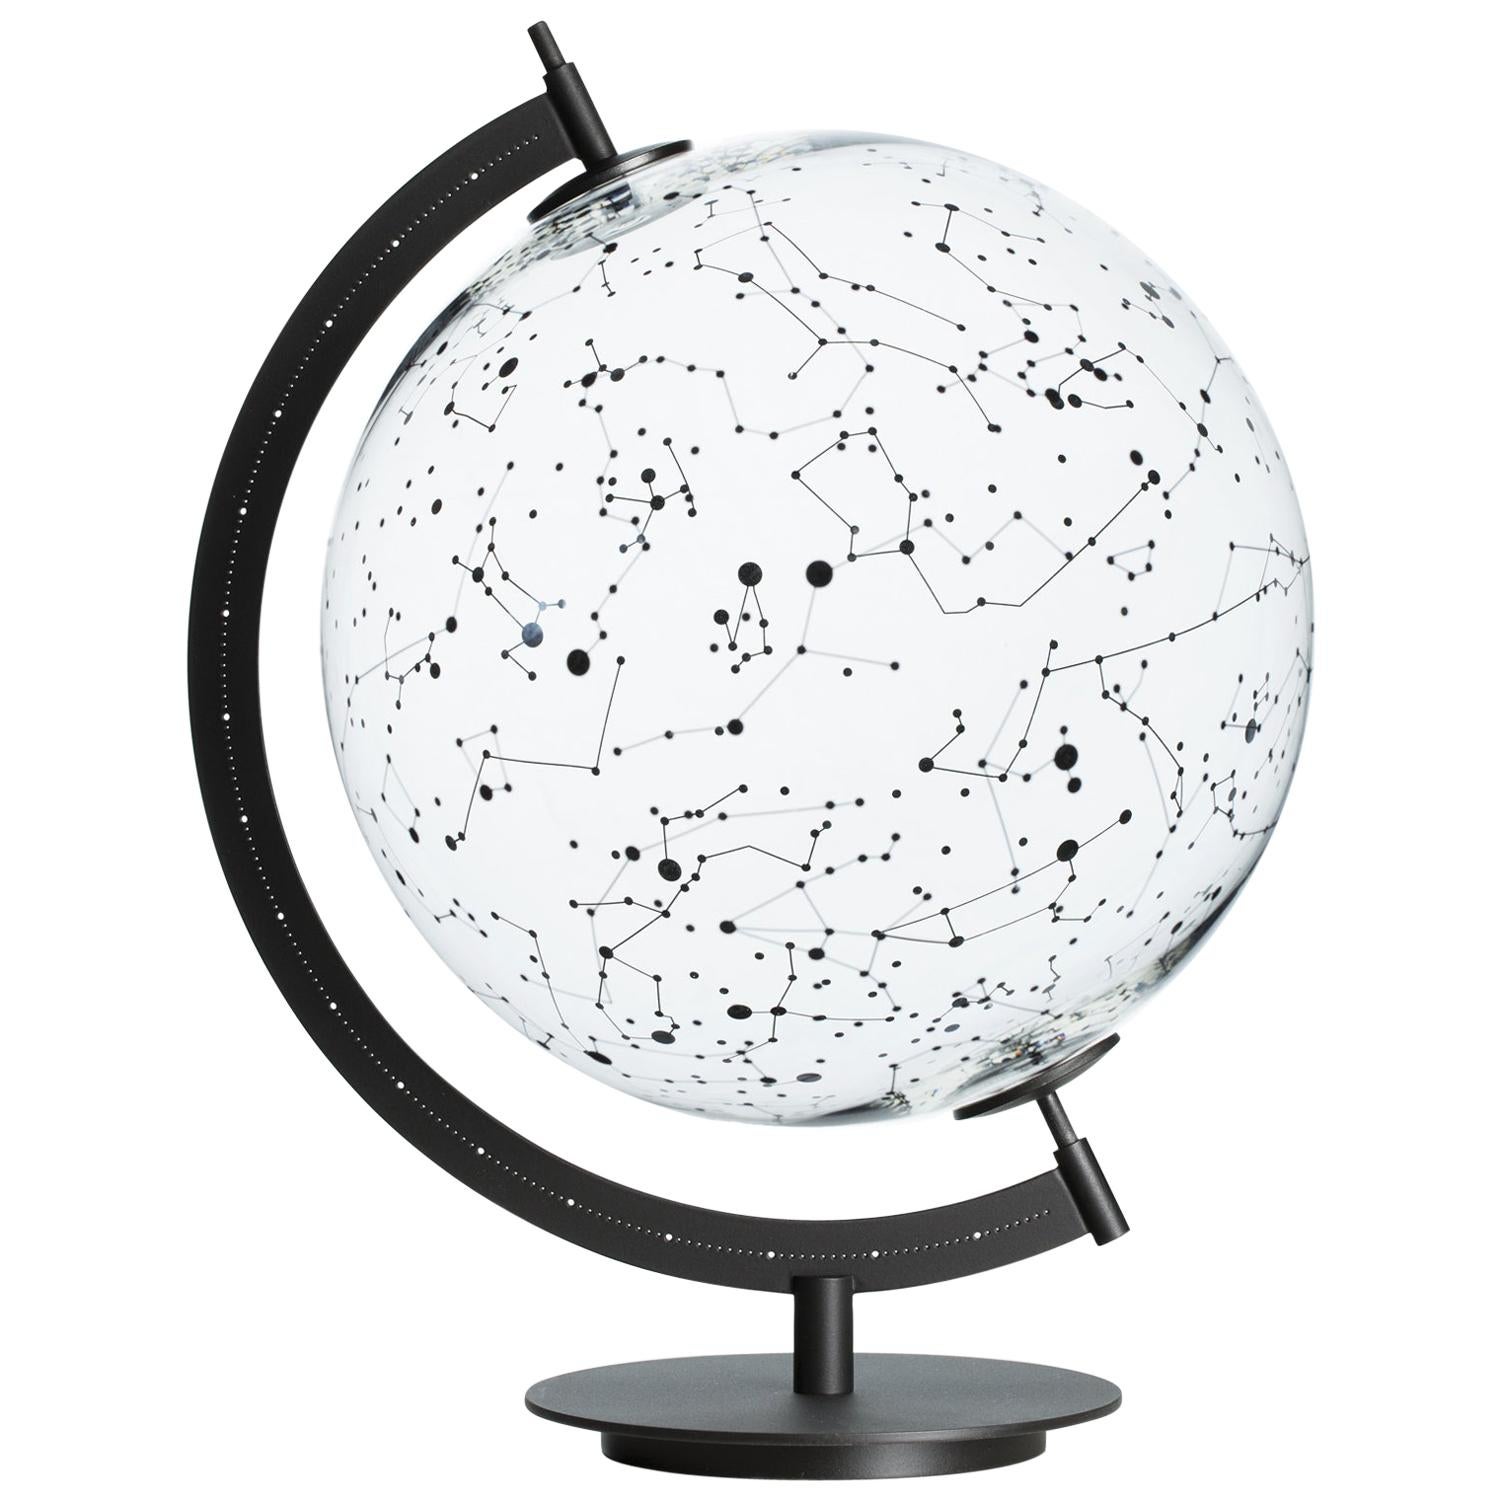 What does a globe look like?